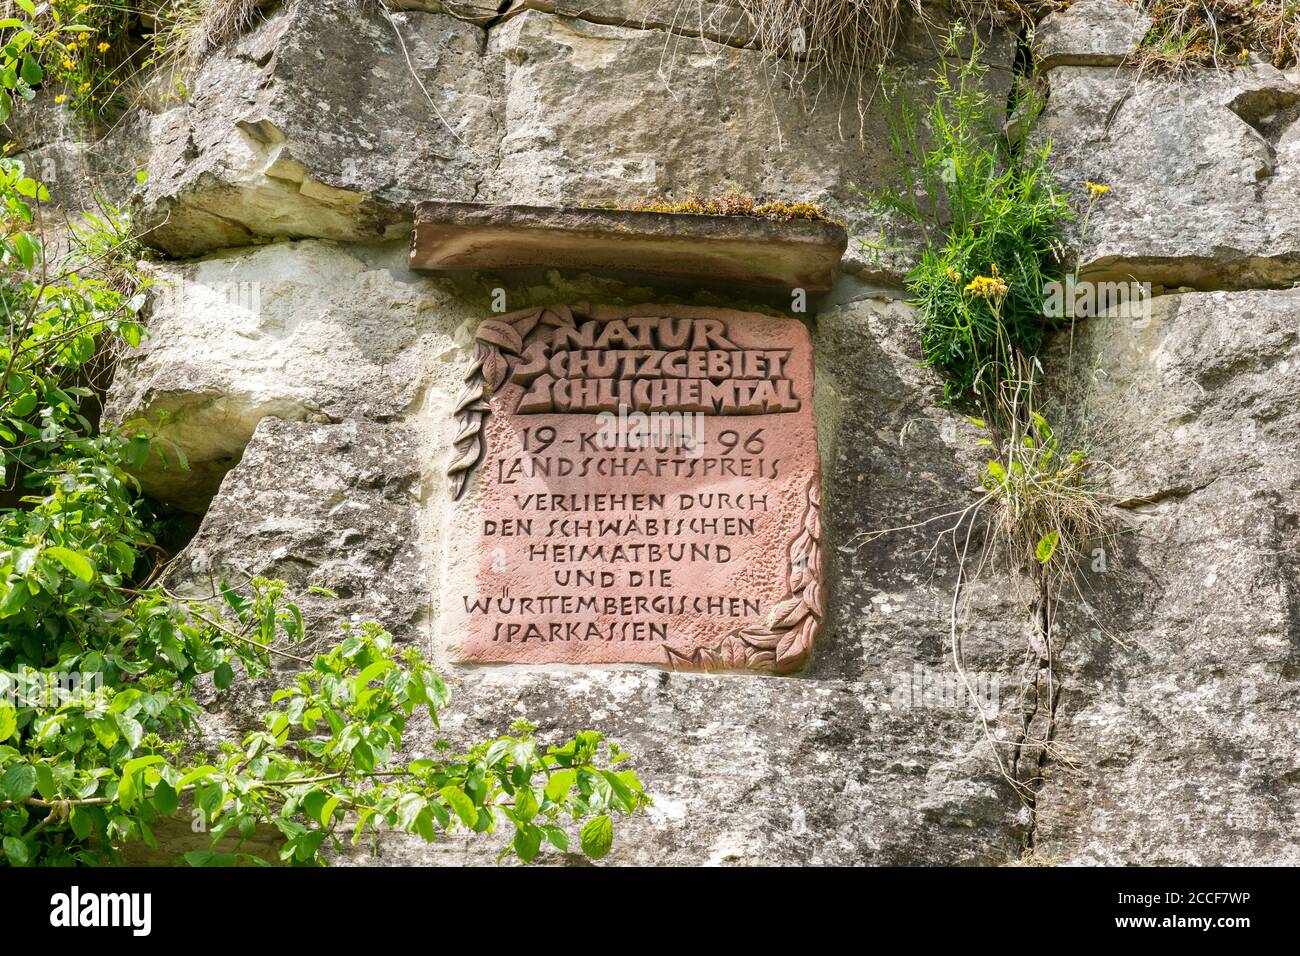 Germany, Baden-Württemberg, Epfendorf, memorial stone 'Culture Landscape Award' in the Schischem Valley near Butschhof Stock Photo